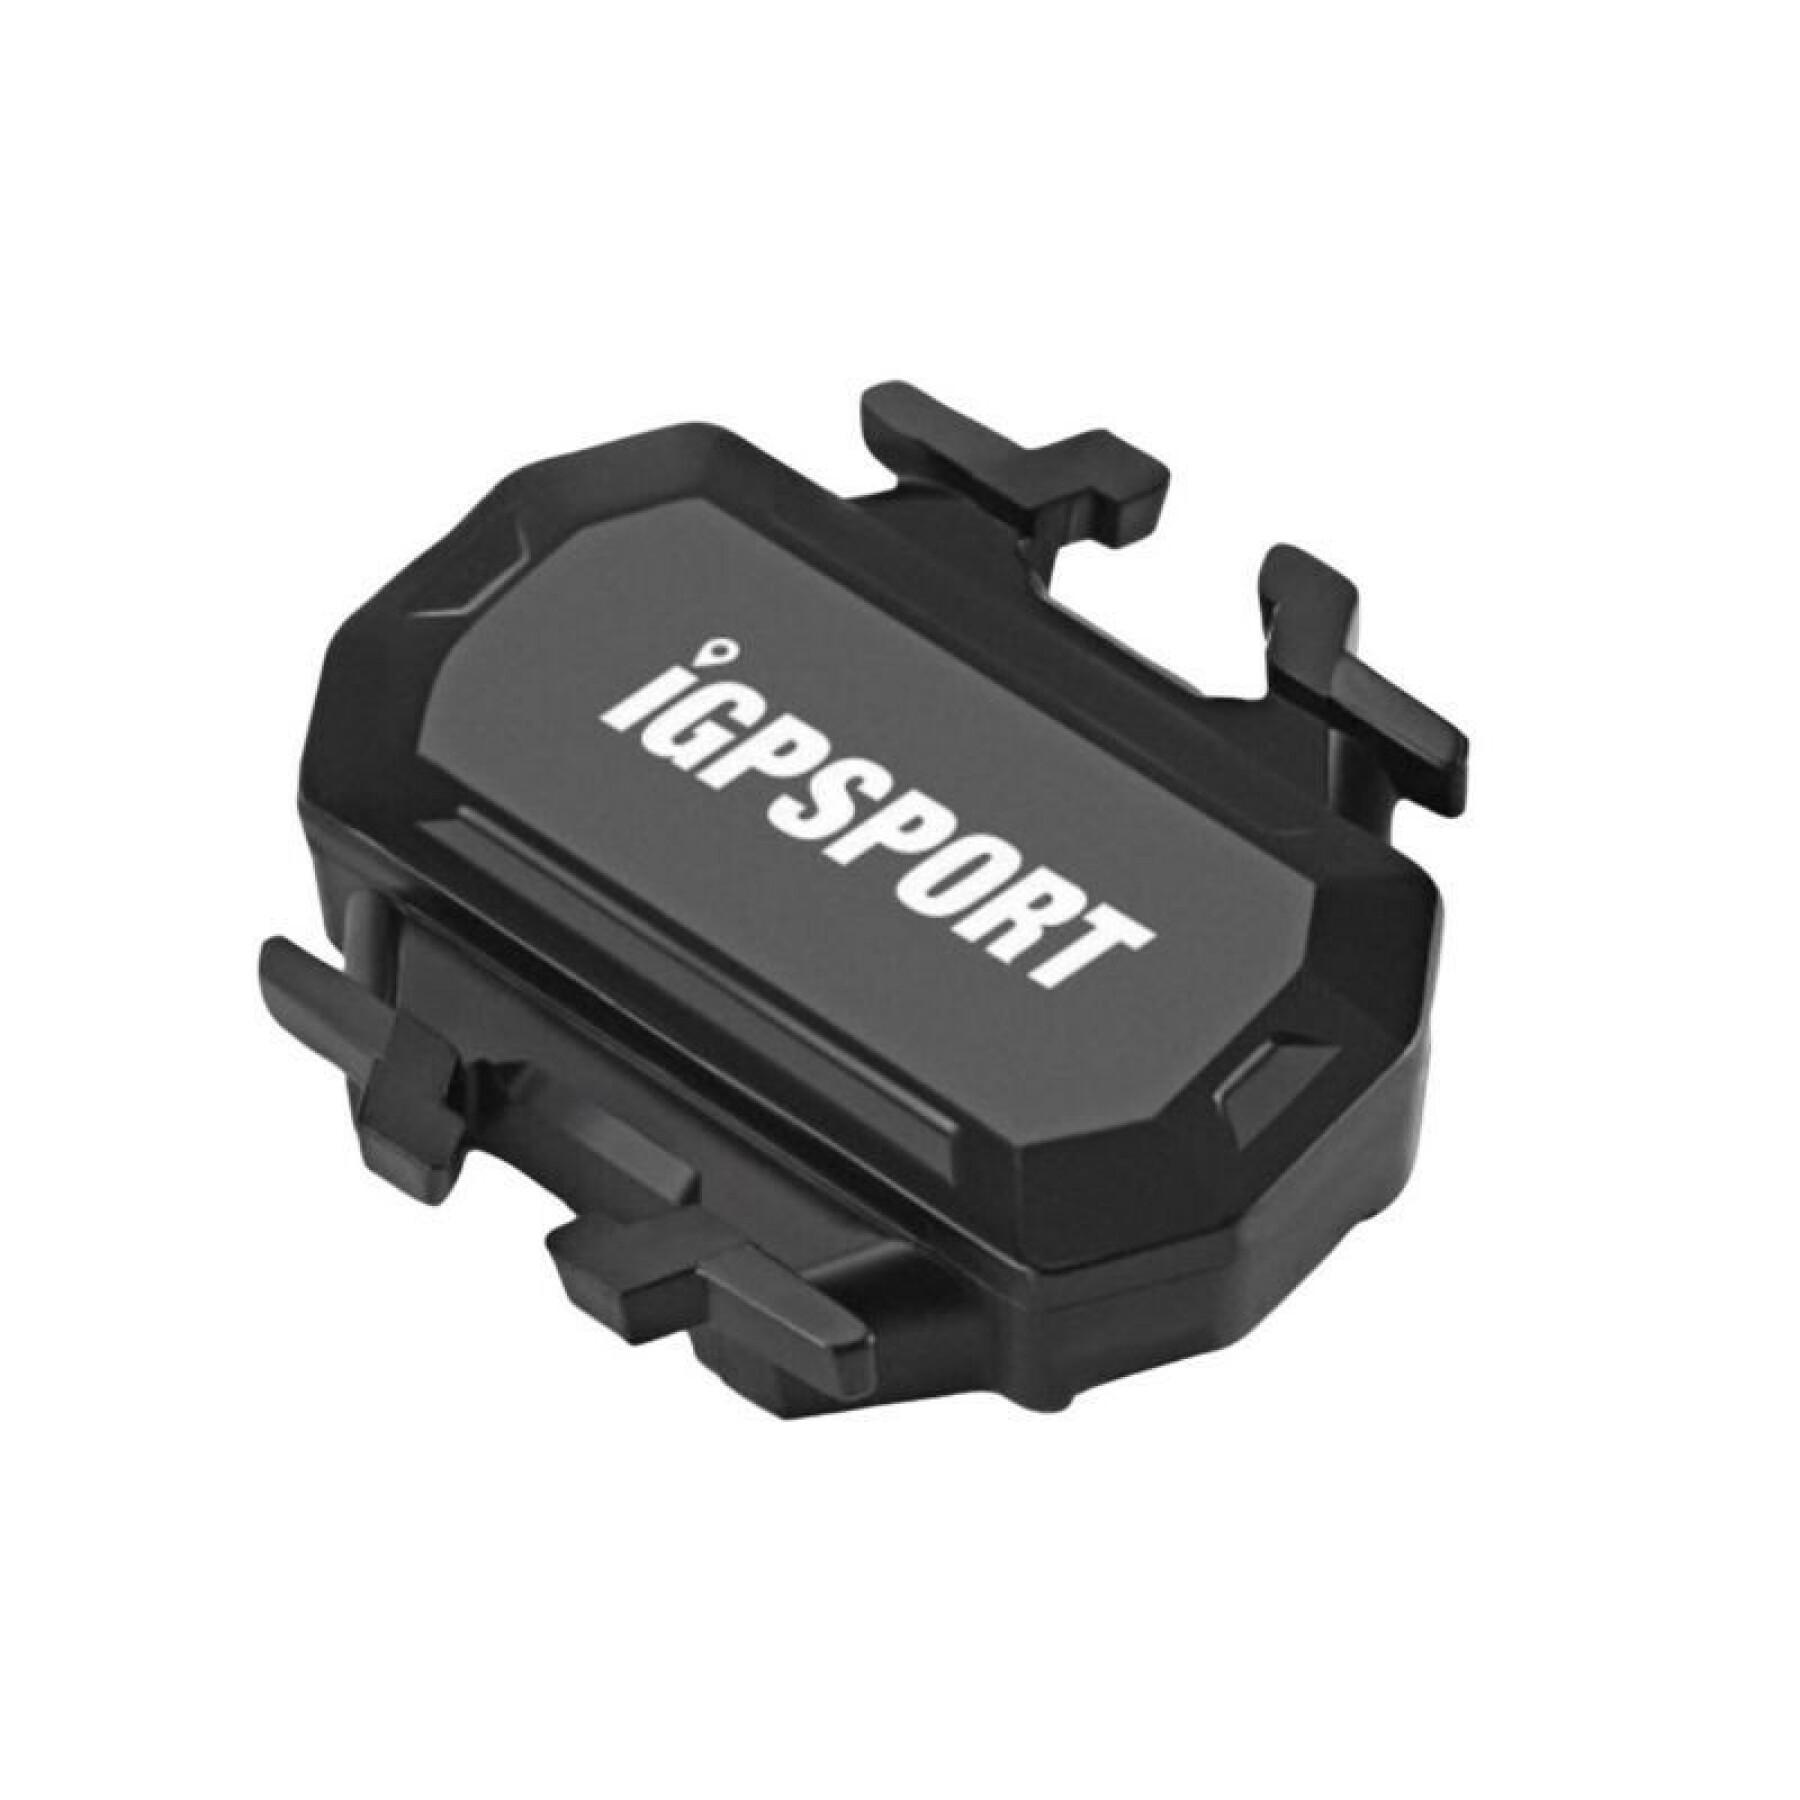 Speed sensor for garmin compatible computers and other Igpsport SPD61 IGPS 630-620 -520 -320